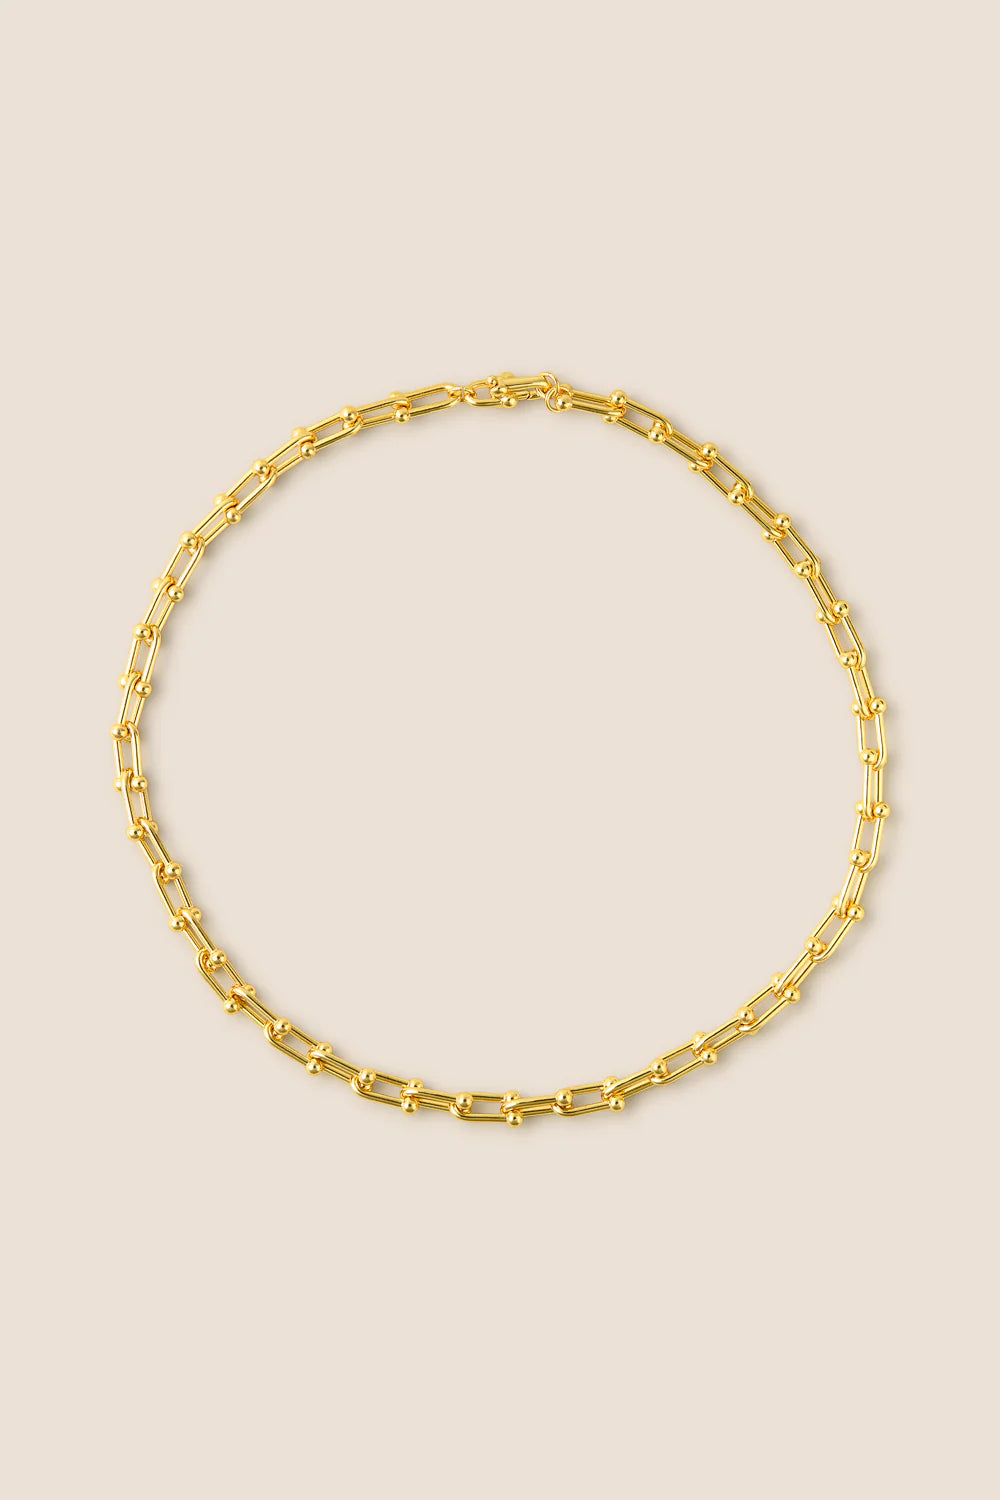 Solange necklace